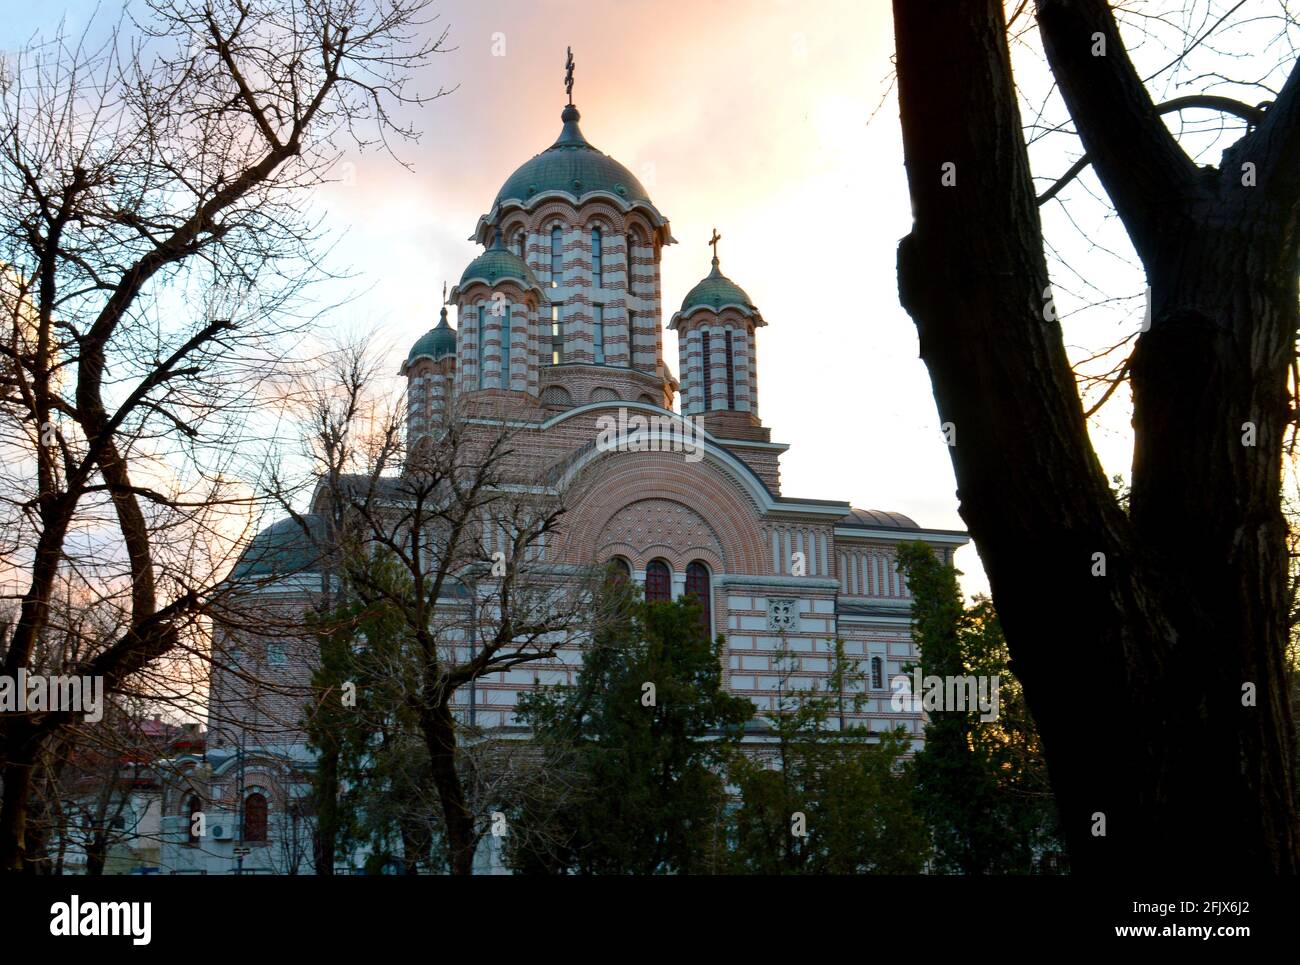 Biserica Sfântul Elefterie (Church of St Eleftherus), a Romanian orthodox church in Bucharest seen through the threes in evening light Stock Photo